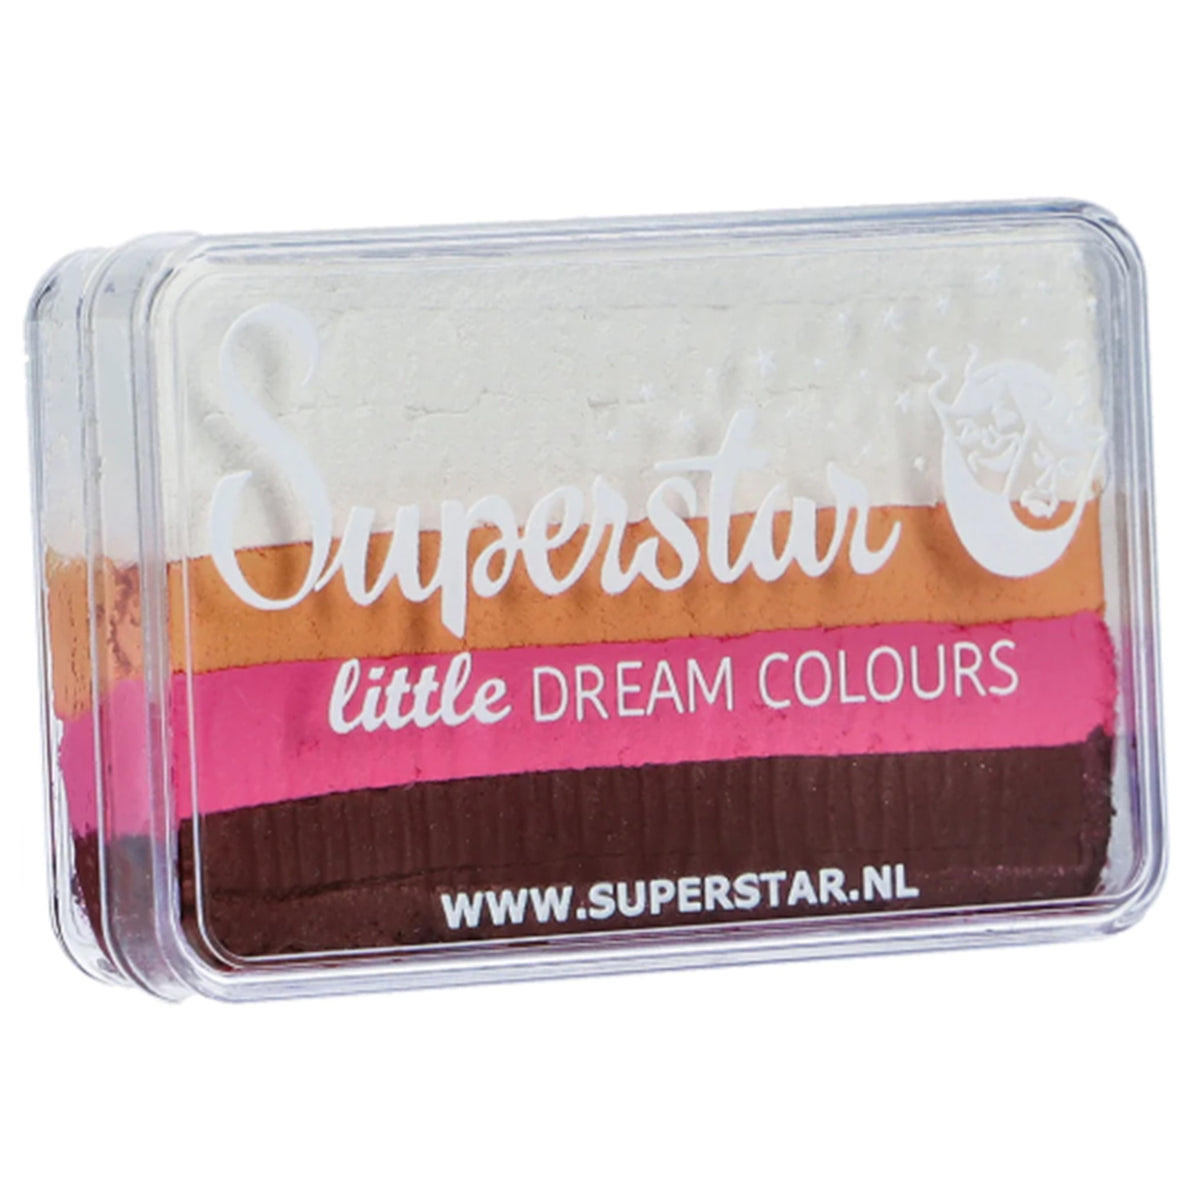 Superstar Dream Colours Rainbow Cake - Little Rose (1.06 oz/30 gm)